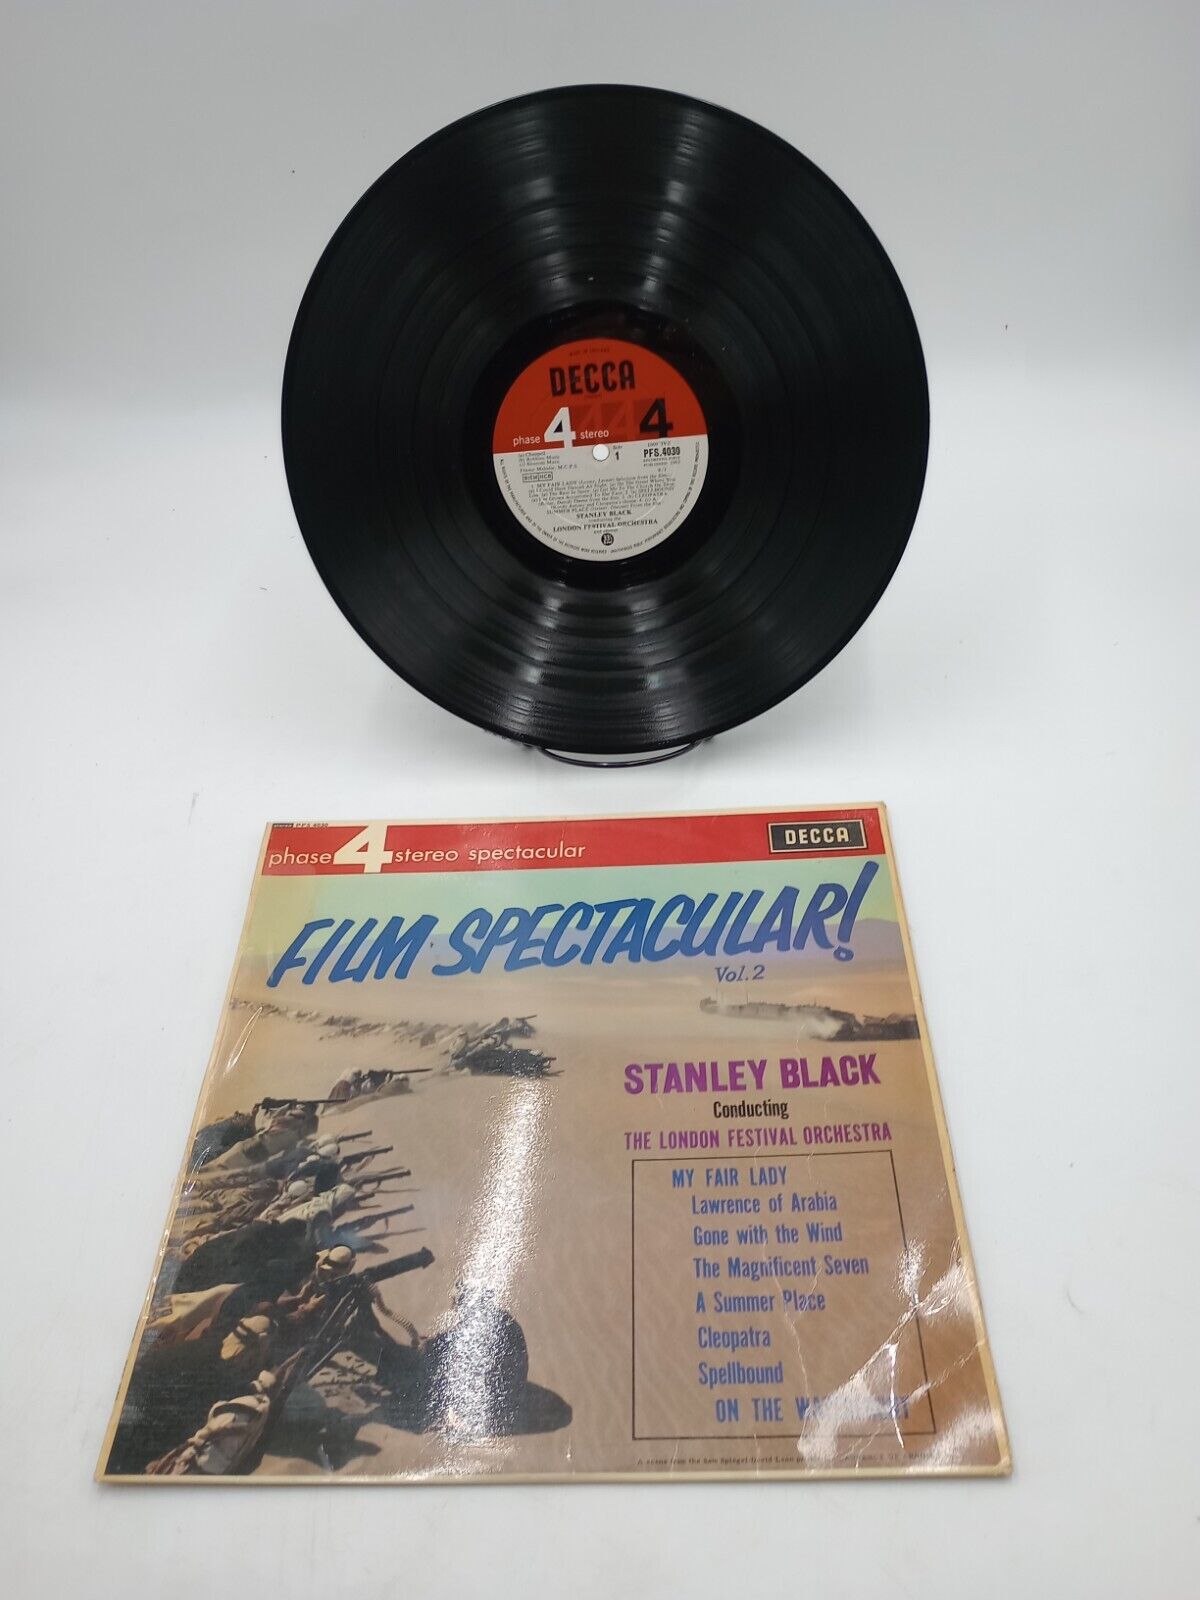 BOXDG14 Stanley Black - Film Spectacular! 2 LP  Decca PFS 4030  1963 UK